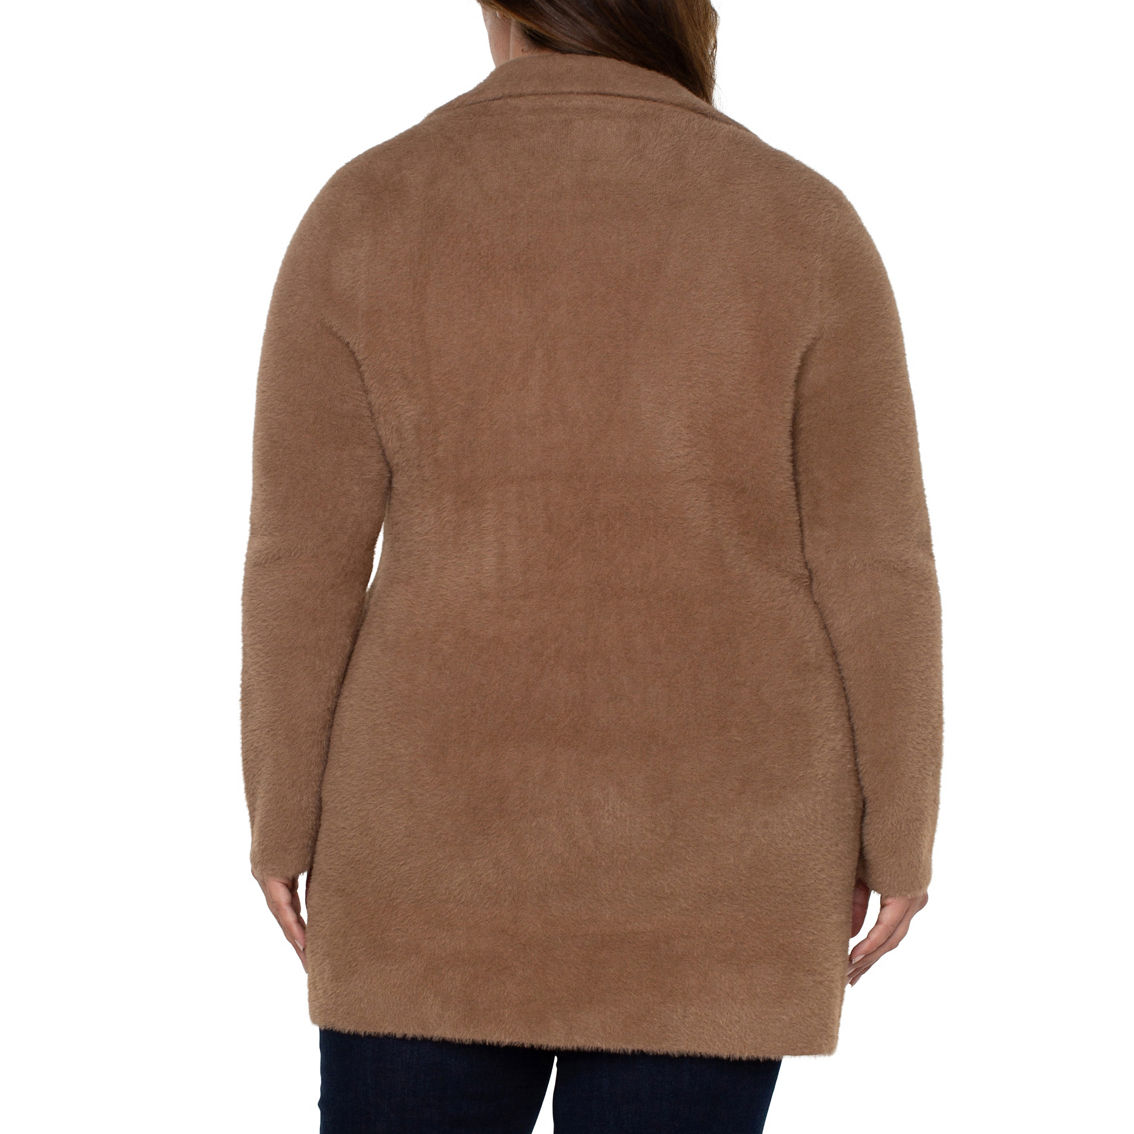 Liverpool Plus Size Coatigan Sweater - Image 2 of 4